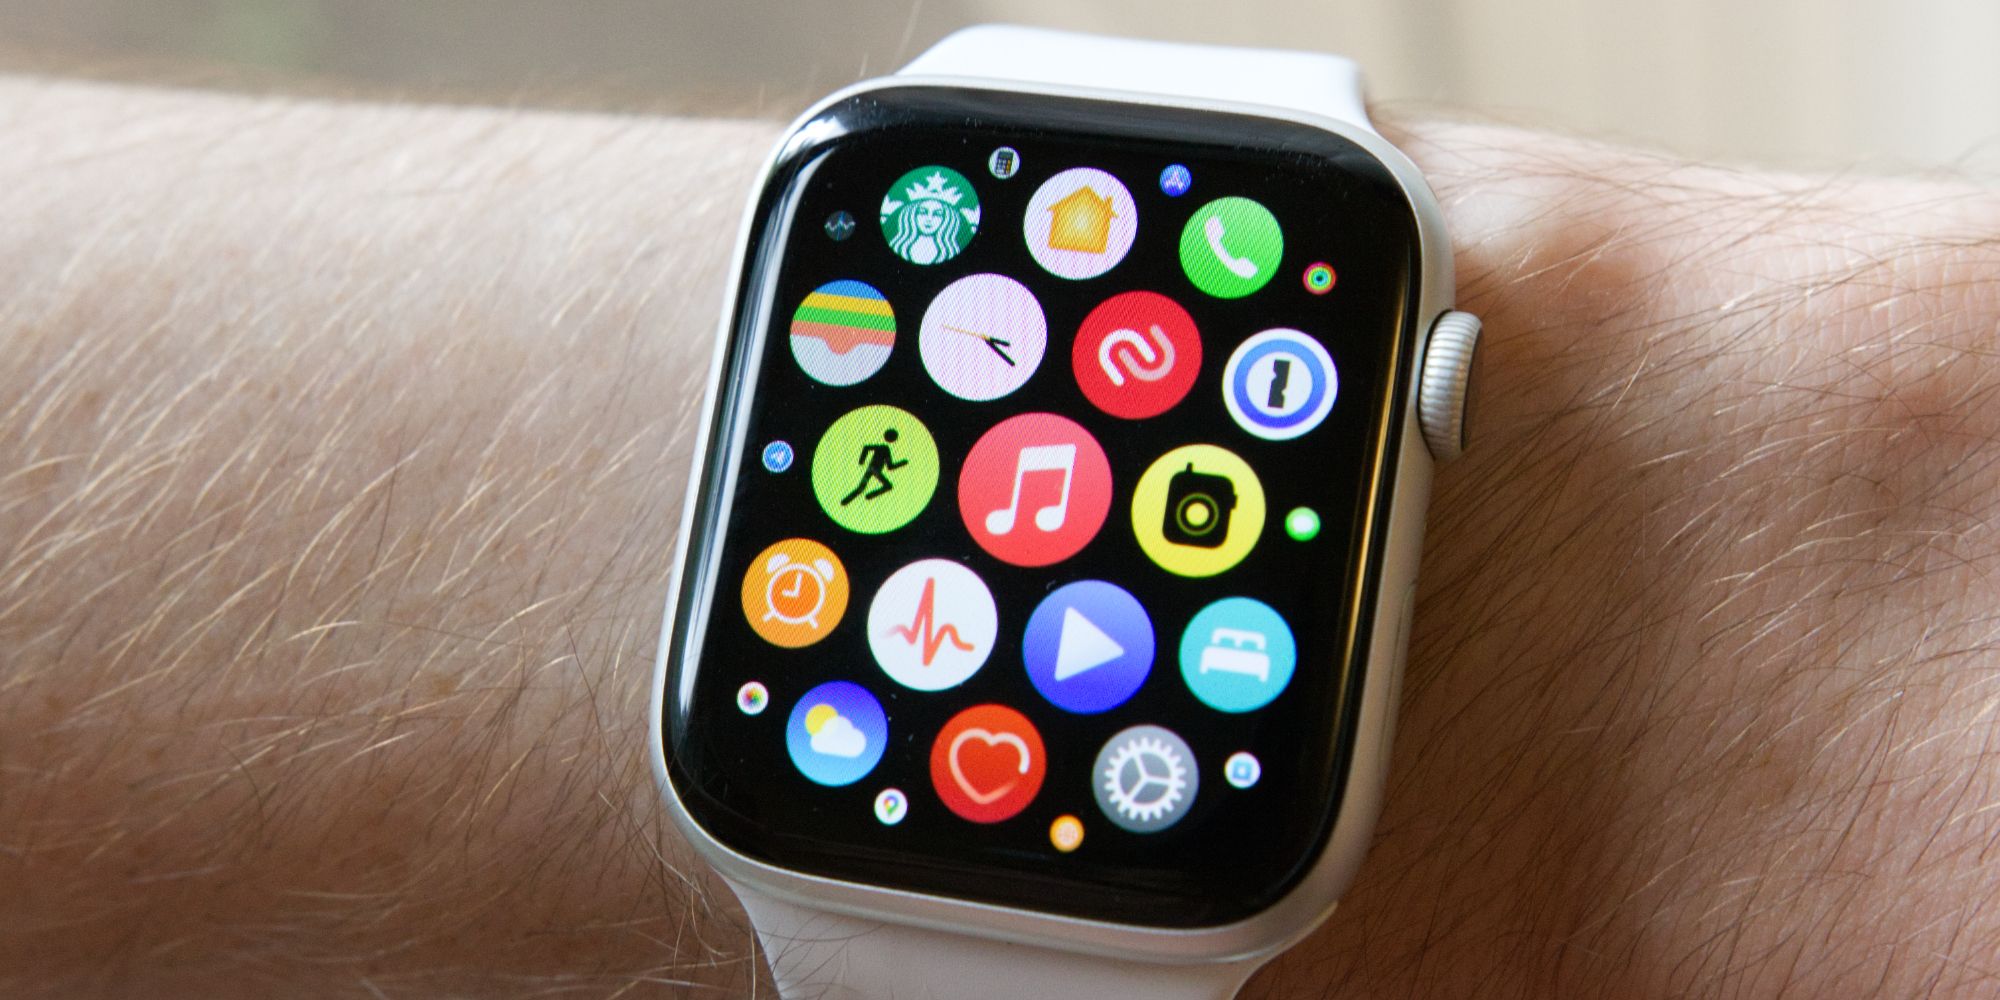  Apple Watch features For Offline Listening